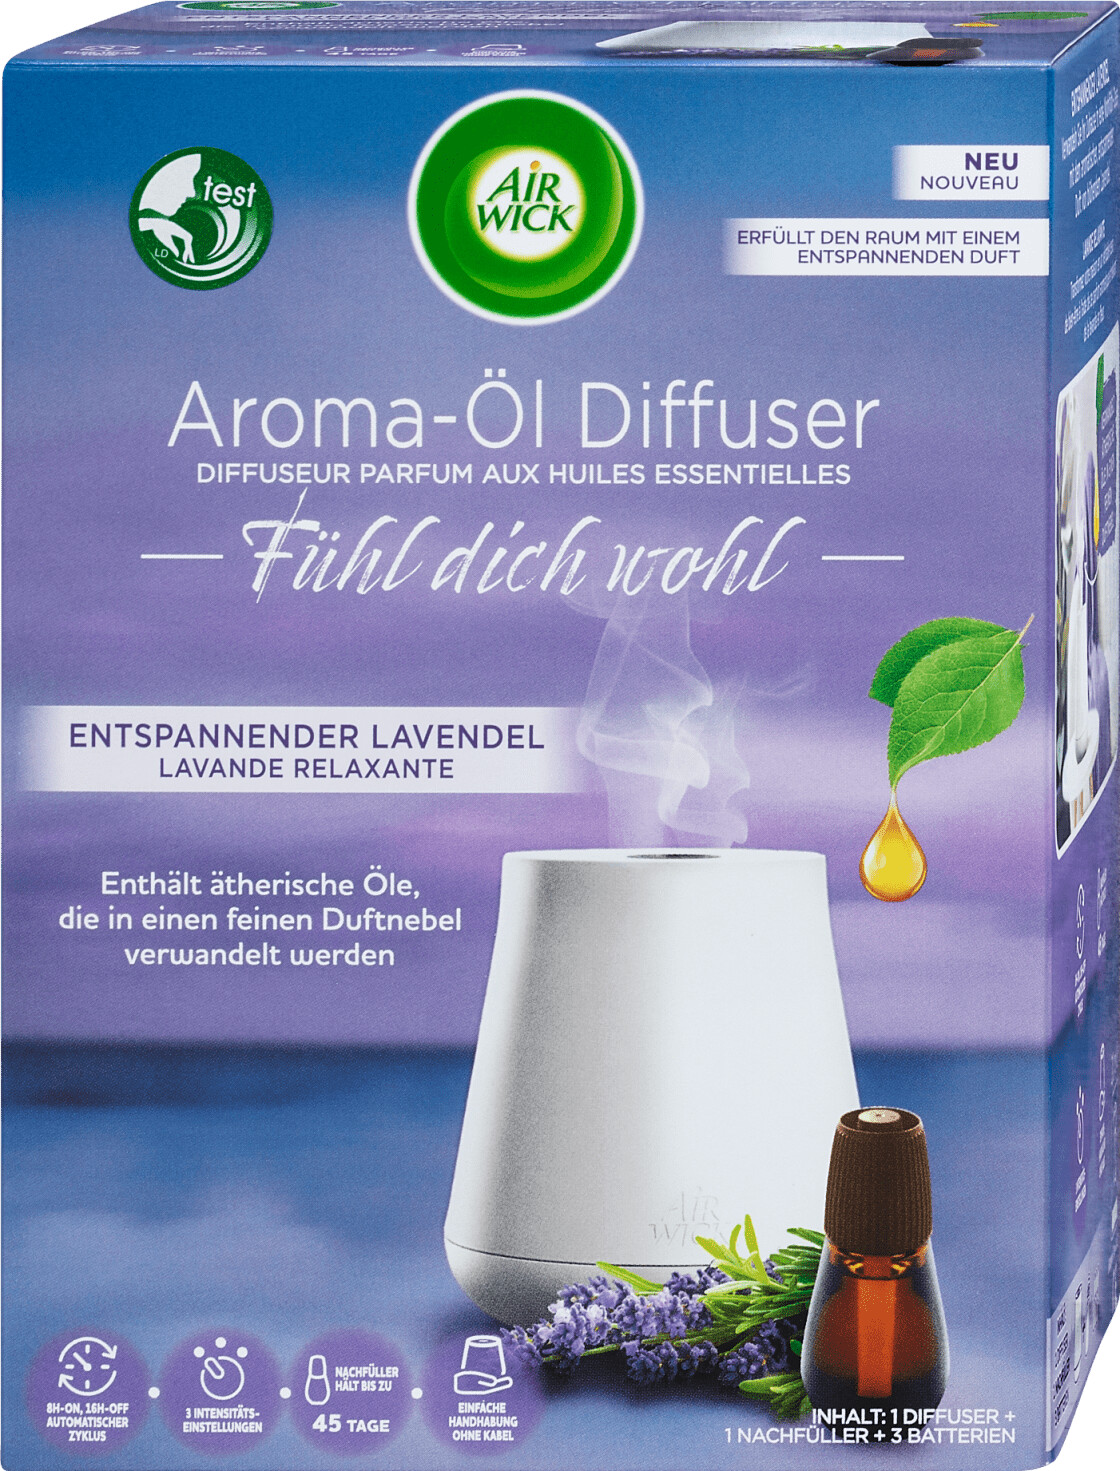 https://cdn.idealo.com/folder/Product/200128/9/200128917/s1_produktbild_max/airwick-aroma-ol-diffuser-starter-entspannender-lavendel-set.jpg